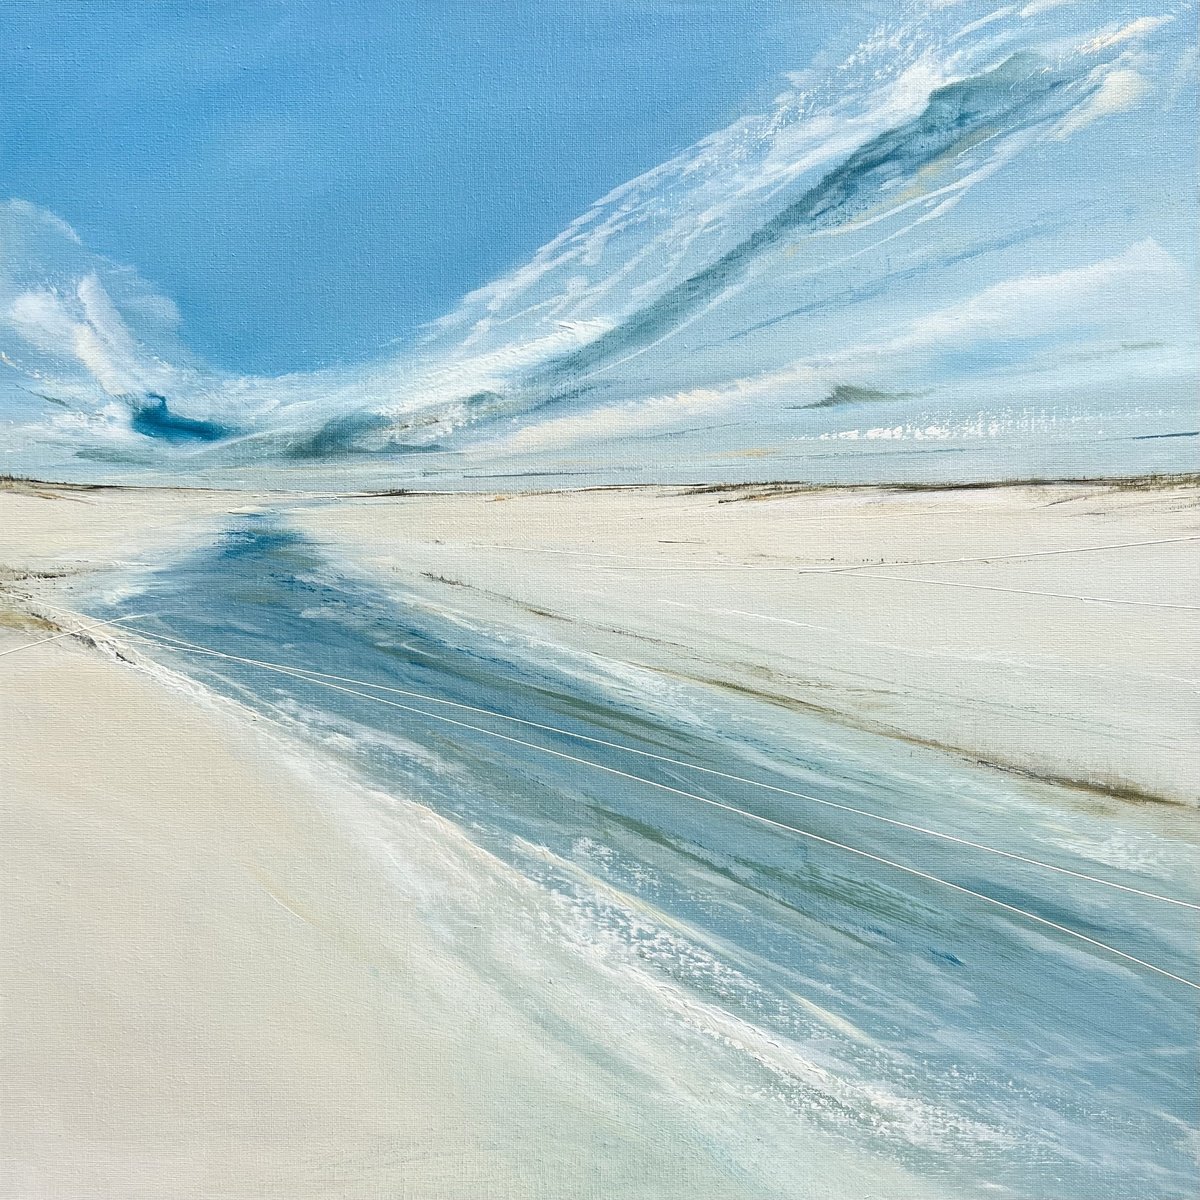 Estuary Flows by Jane Skingley